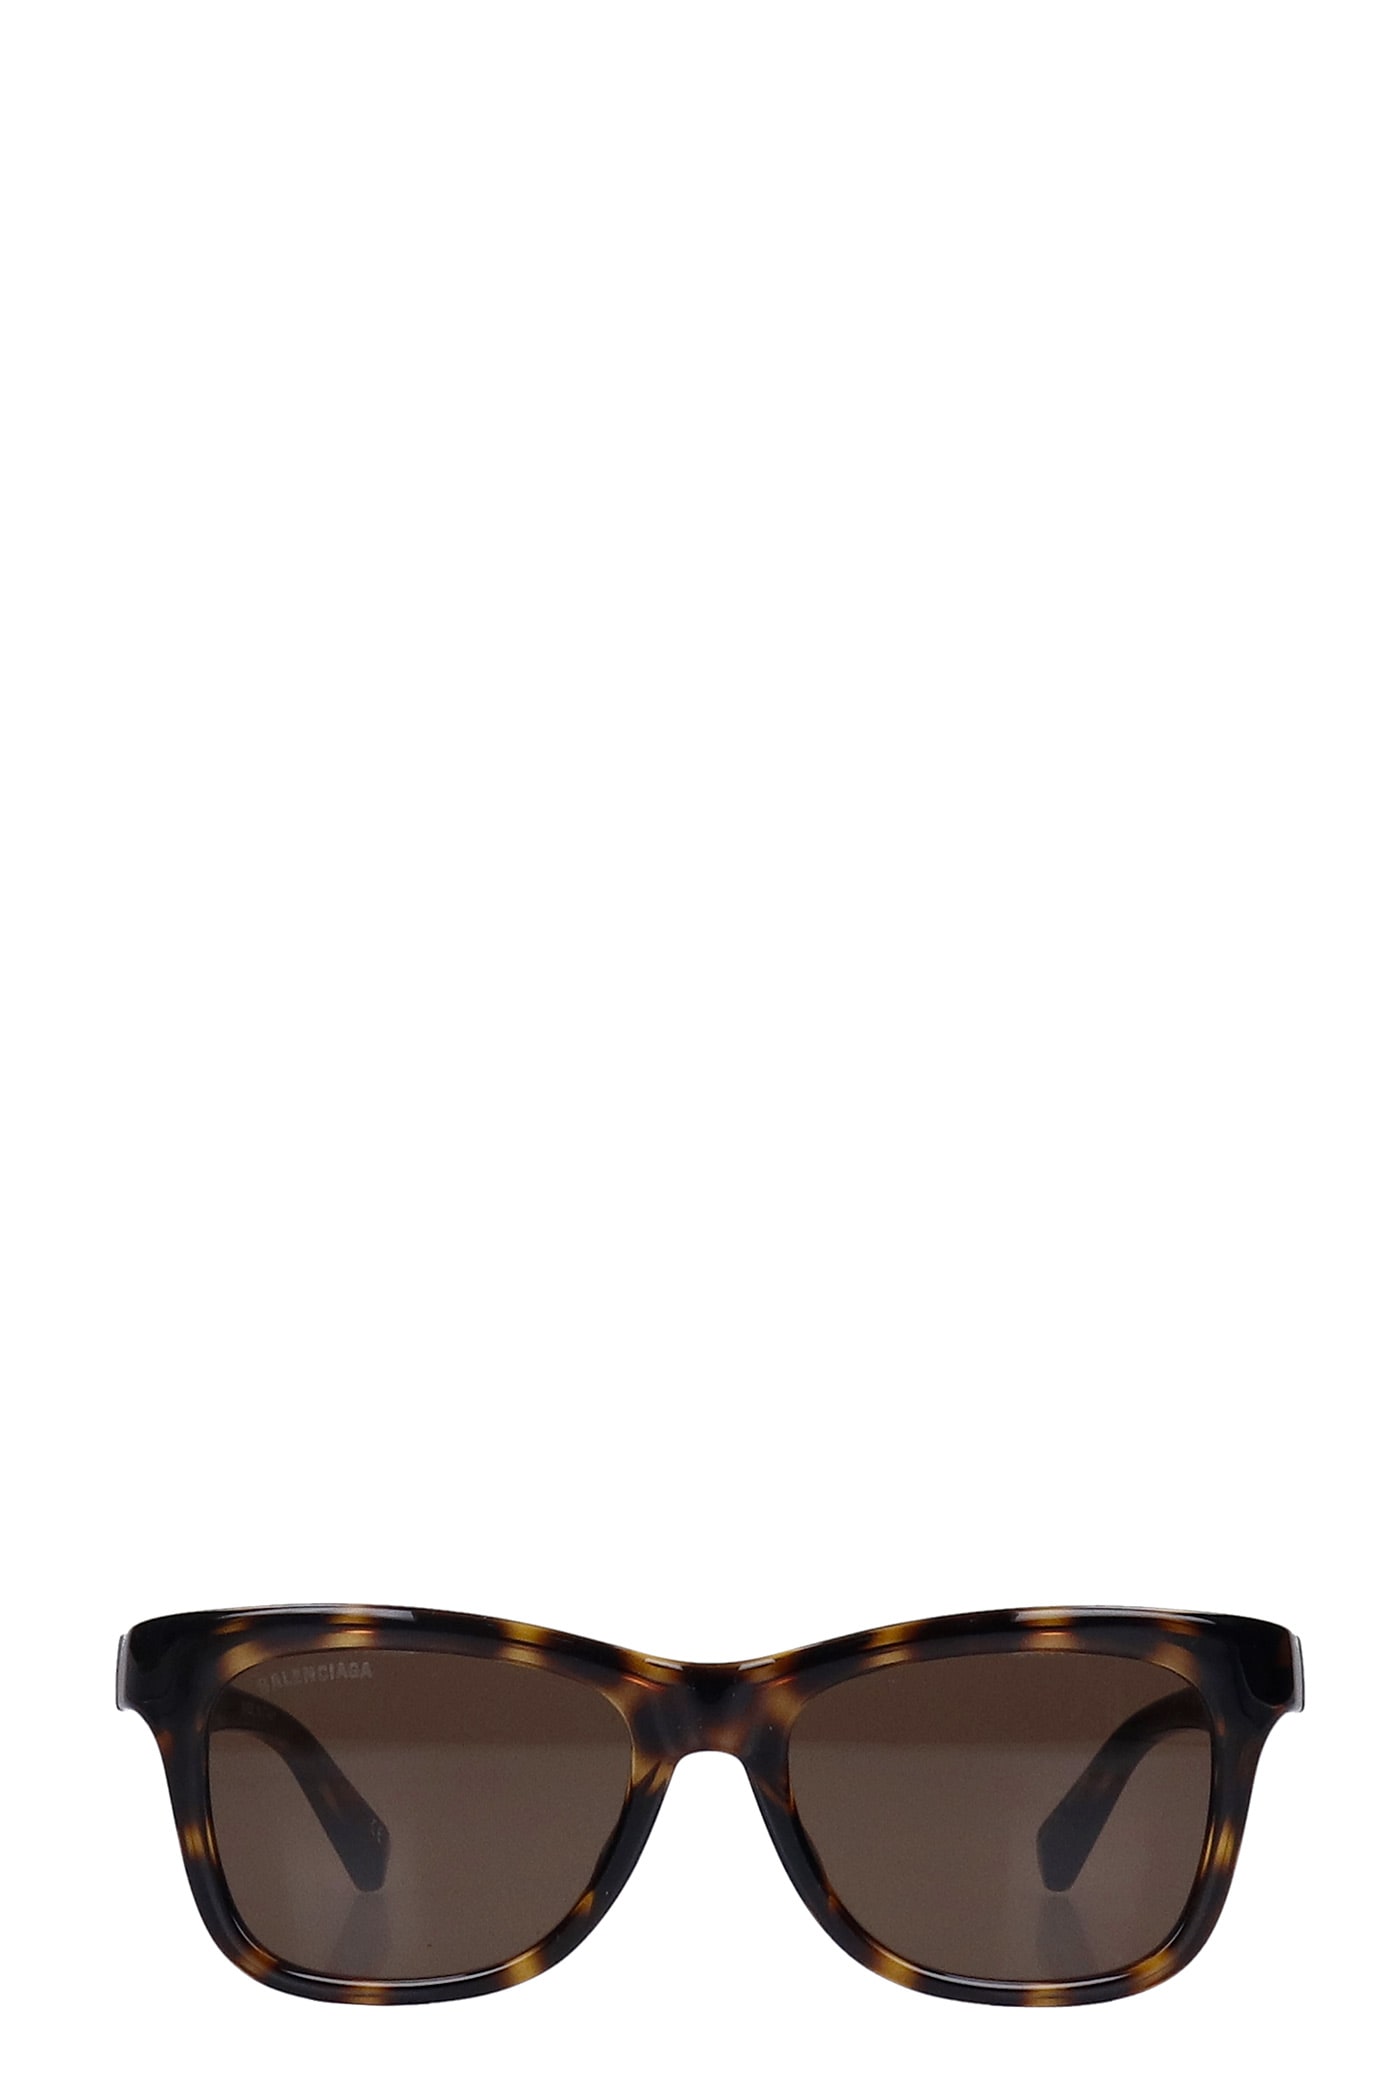 Balenciaga Sunglasses In Brown Acrylic